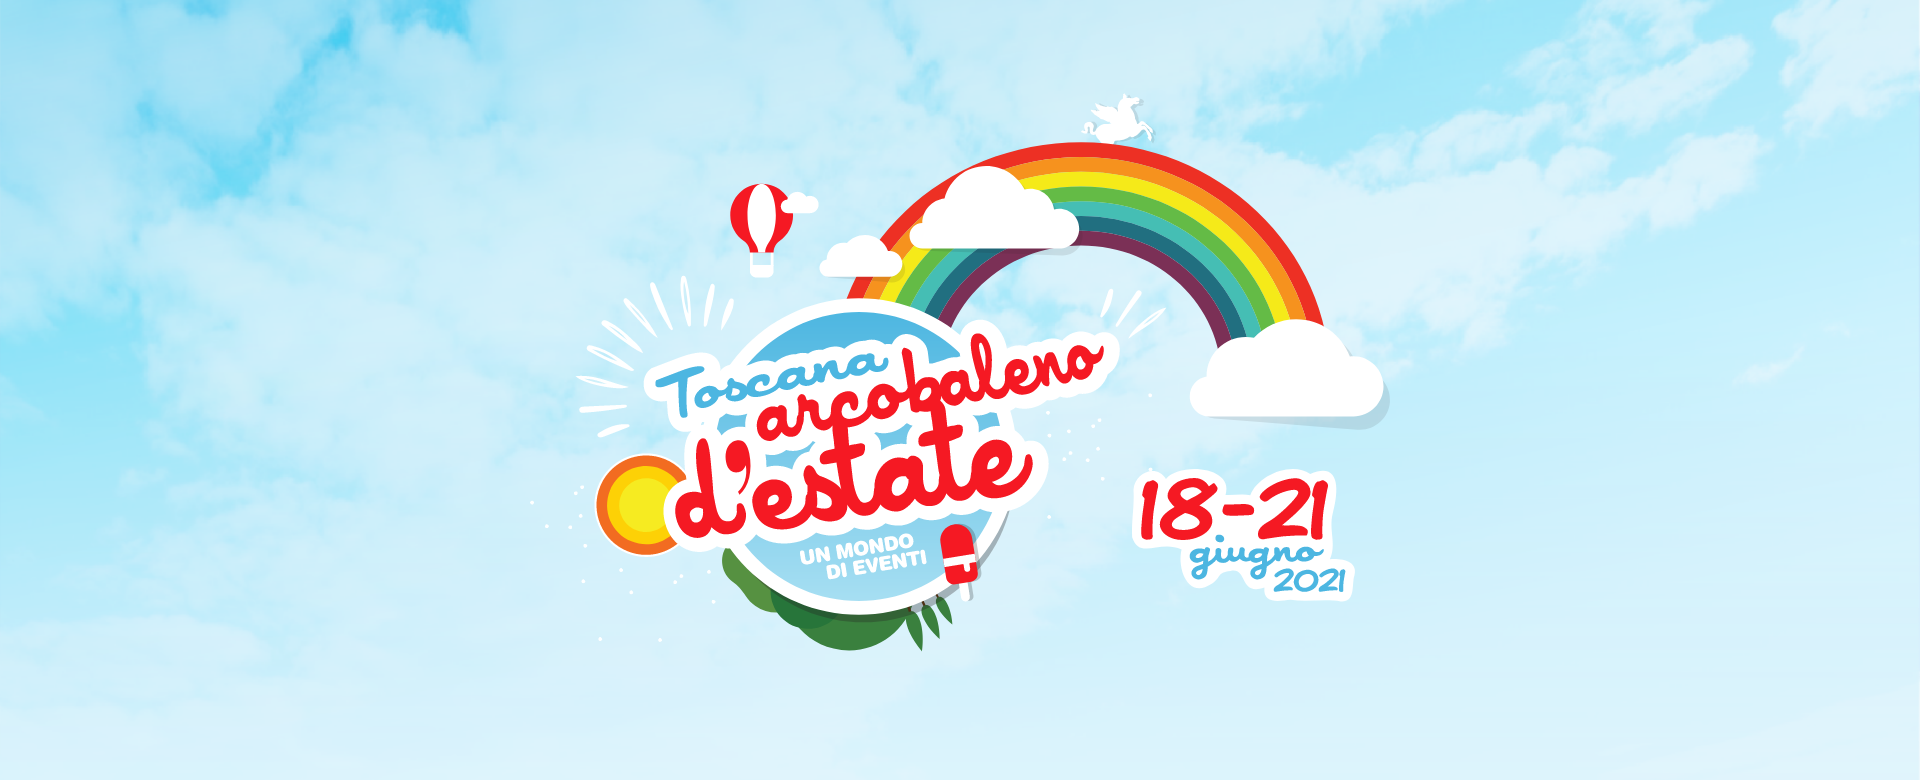 Dal 18 al 21 giugno torna Toscana Arcobaleno Estate